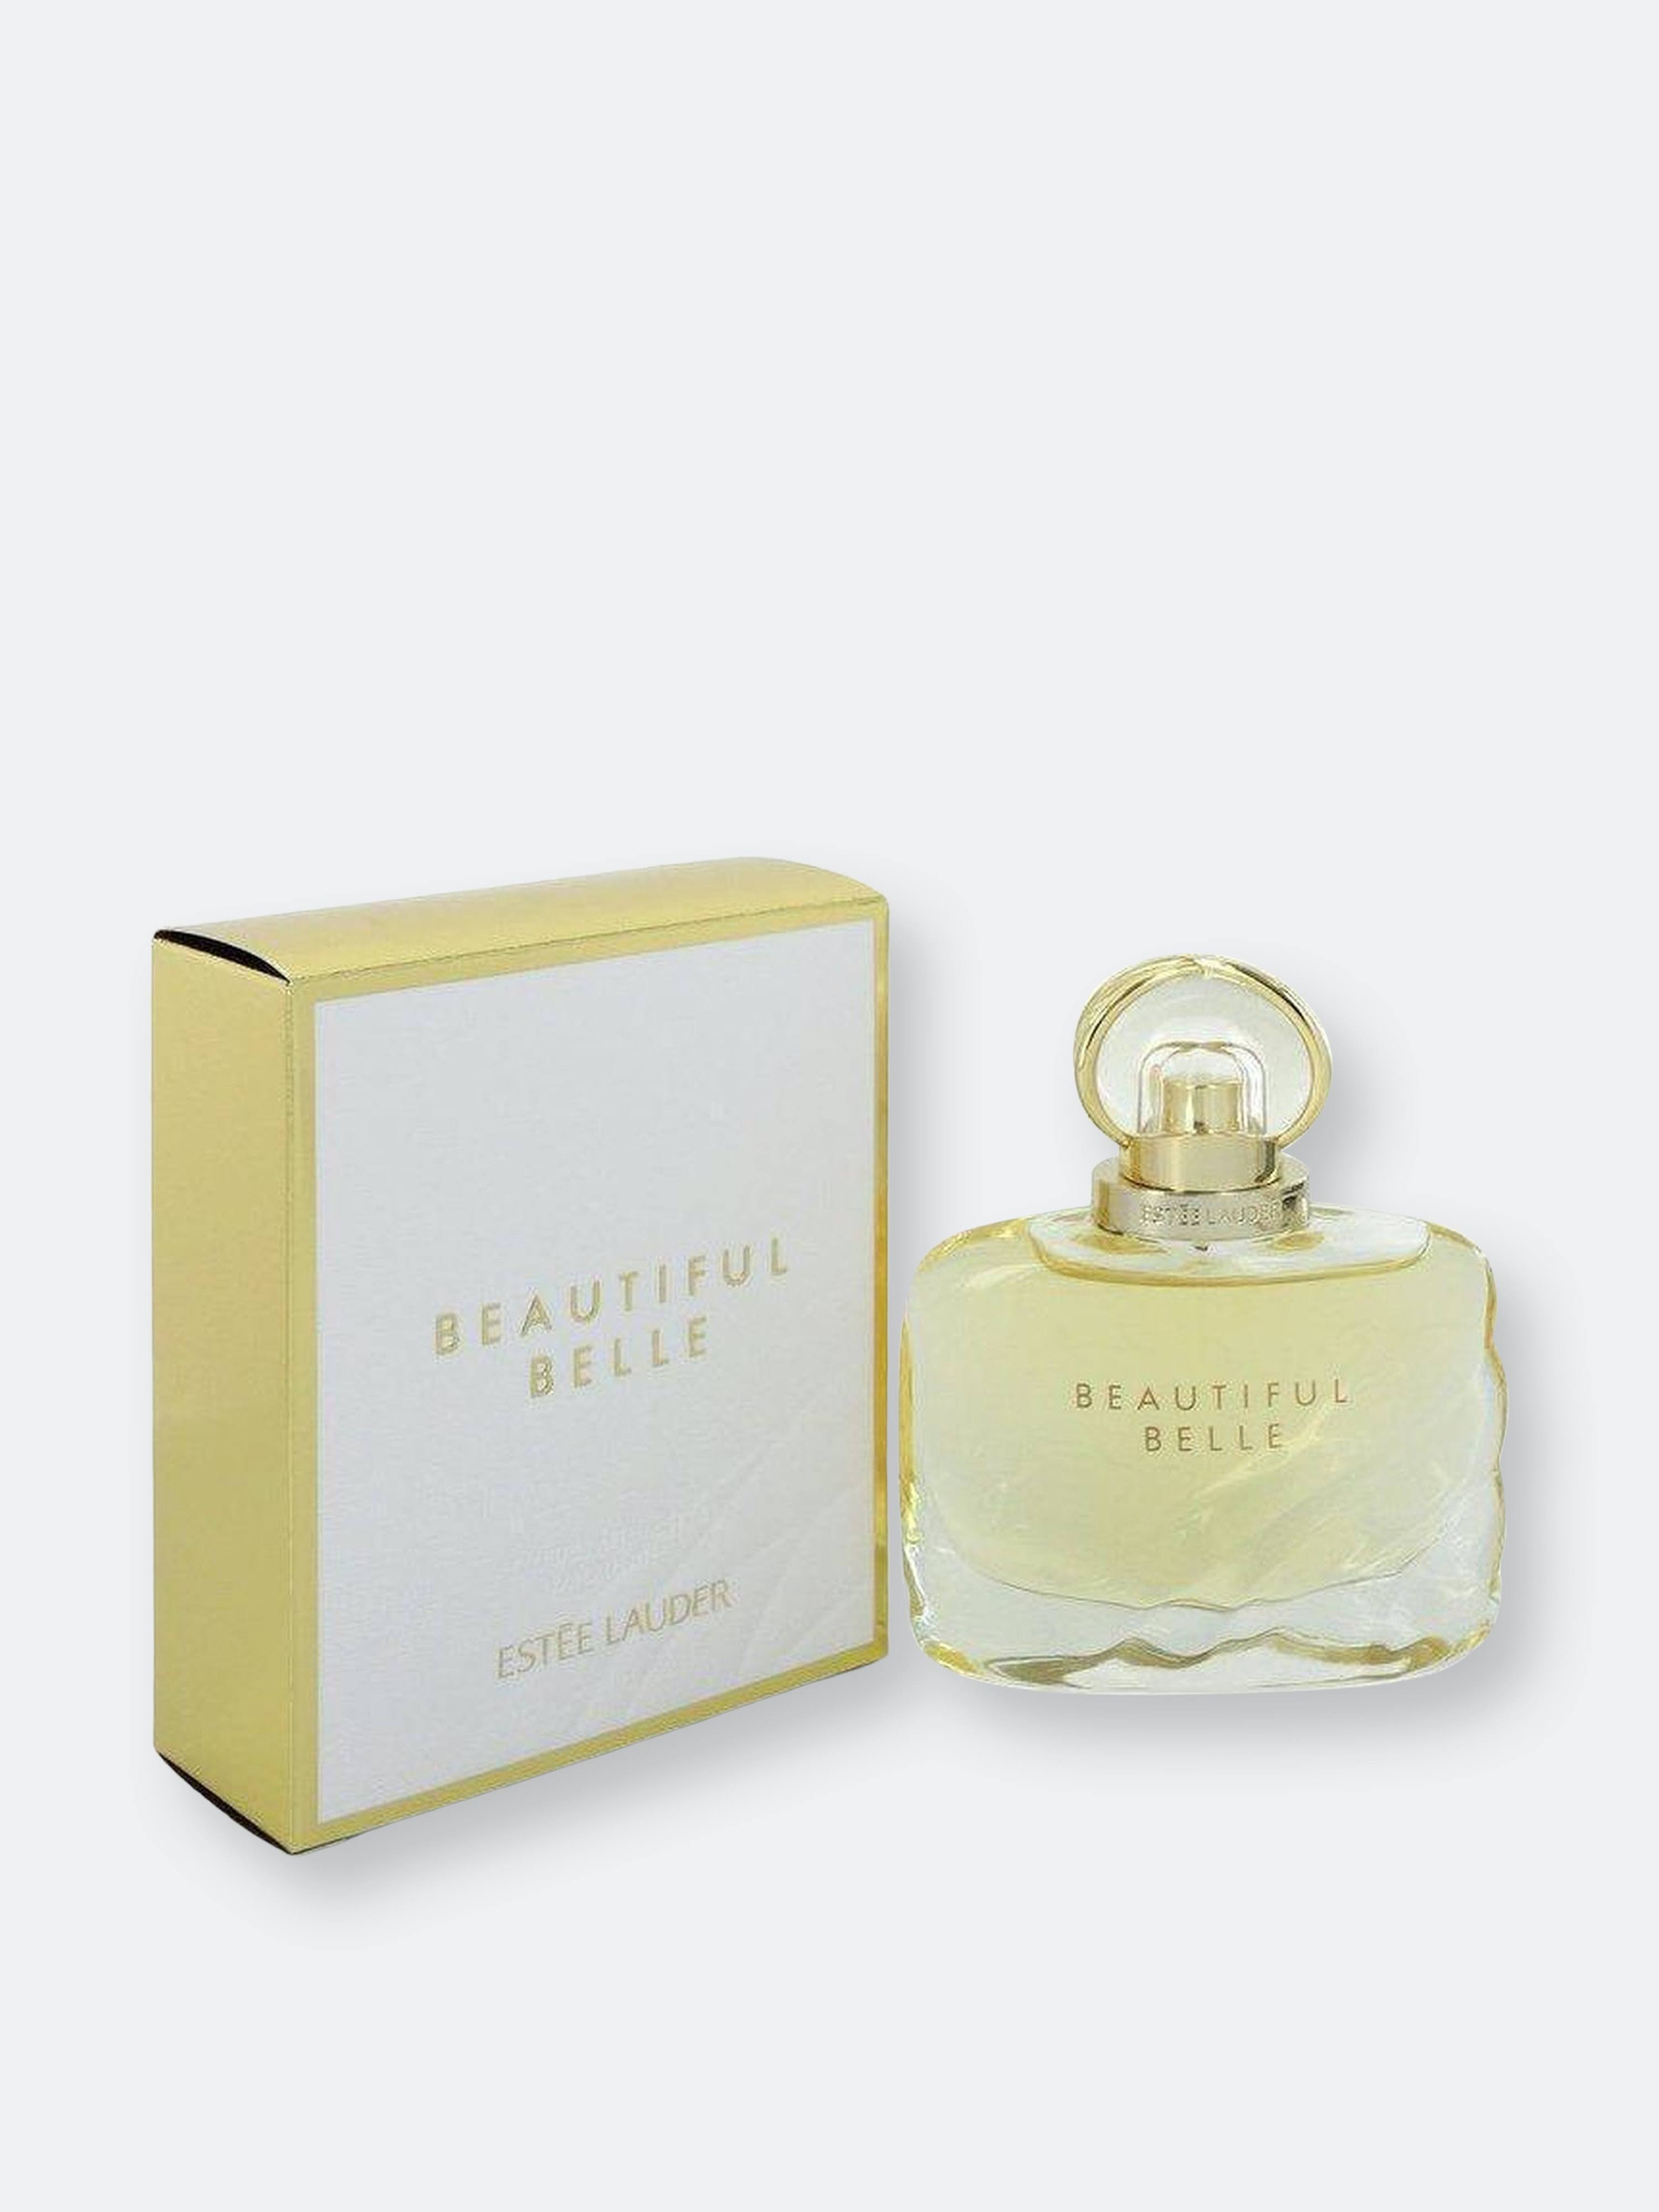 Estee Lauder Beautiful Belle - Eau de Parfum Spray - 1.7 oz